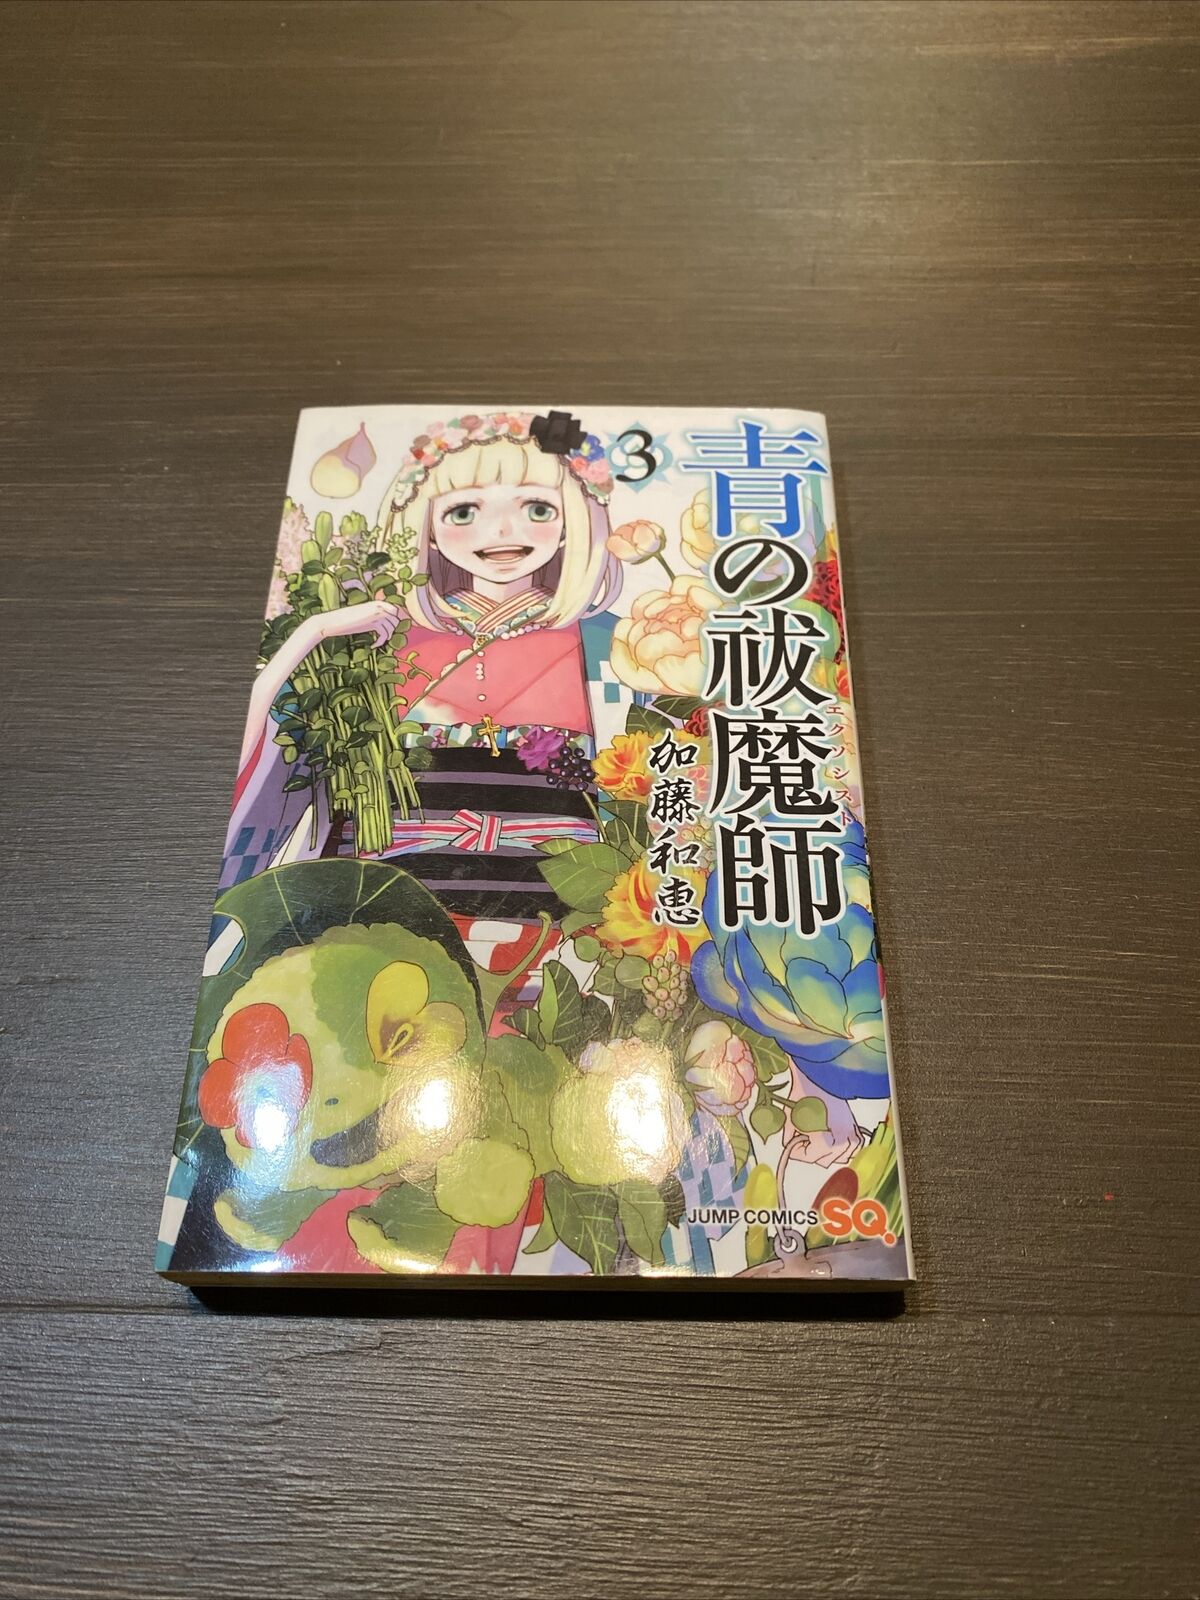 Blue Exorcist Vol. 3 - Japanese Edition (Kazue Kato, Jump Comics, Manga, 2010)